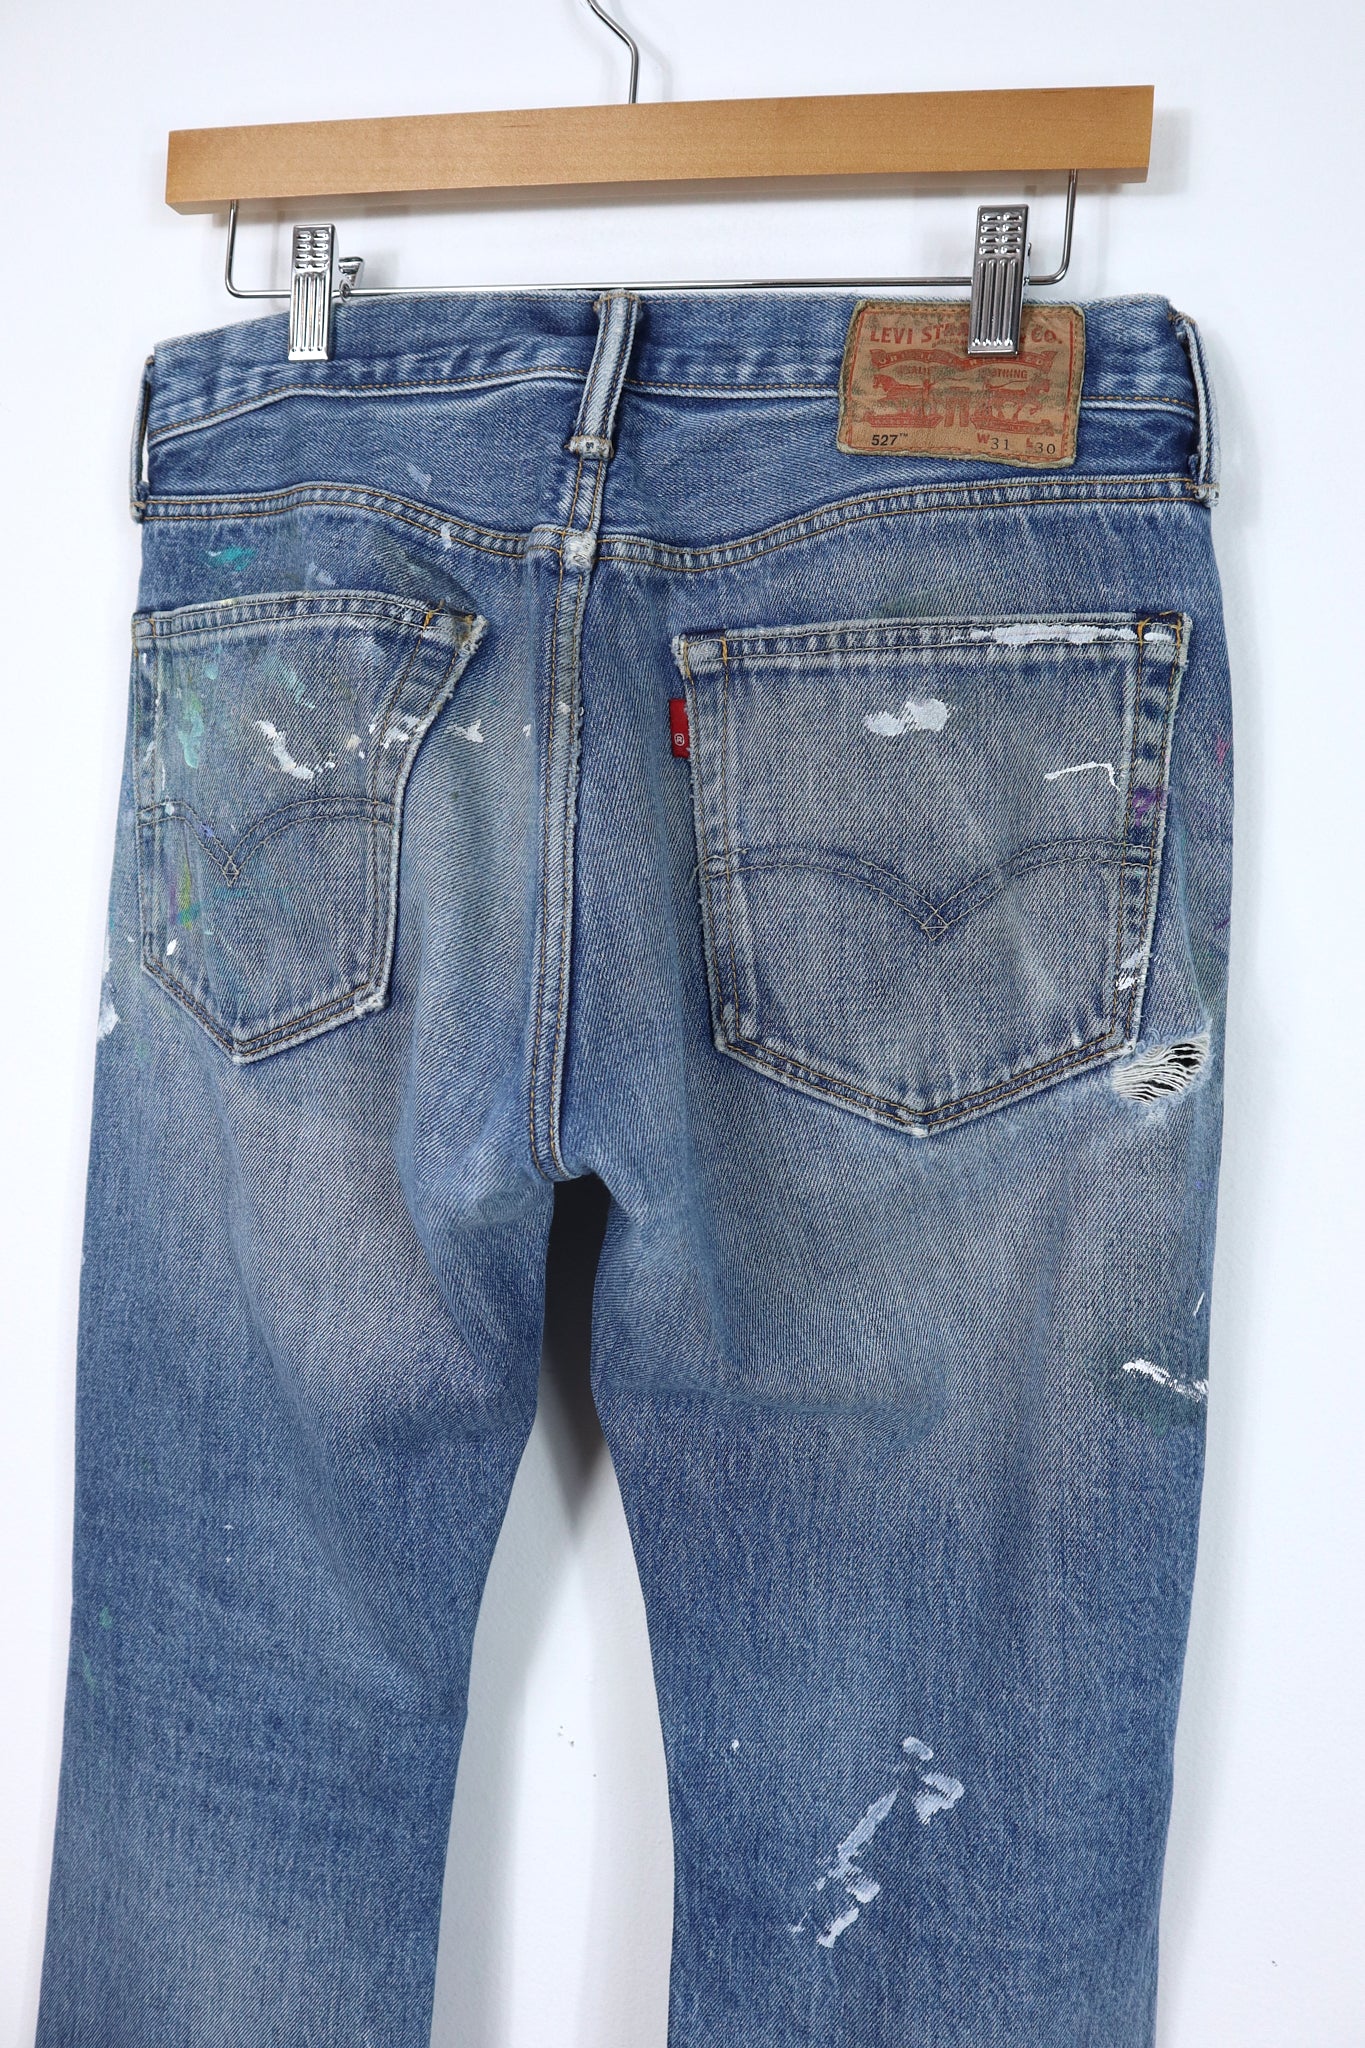 Vintage Levi's 527 Distressed Jeans - Slim Bootcut